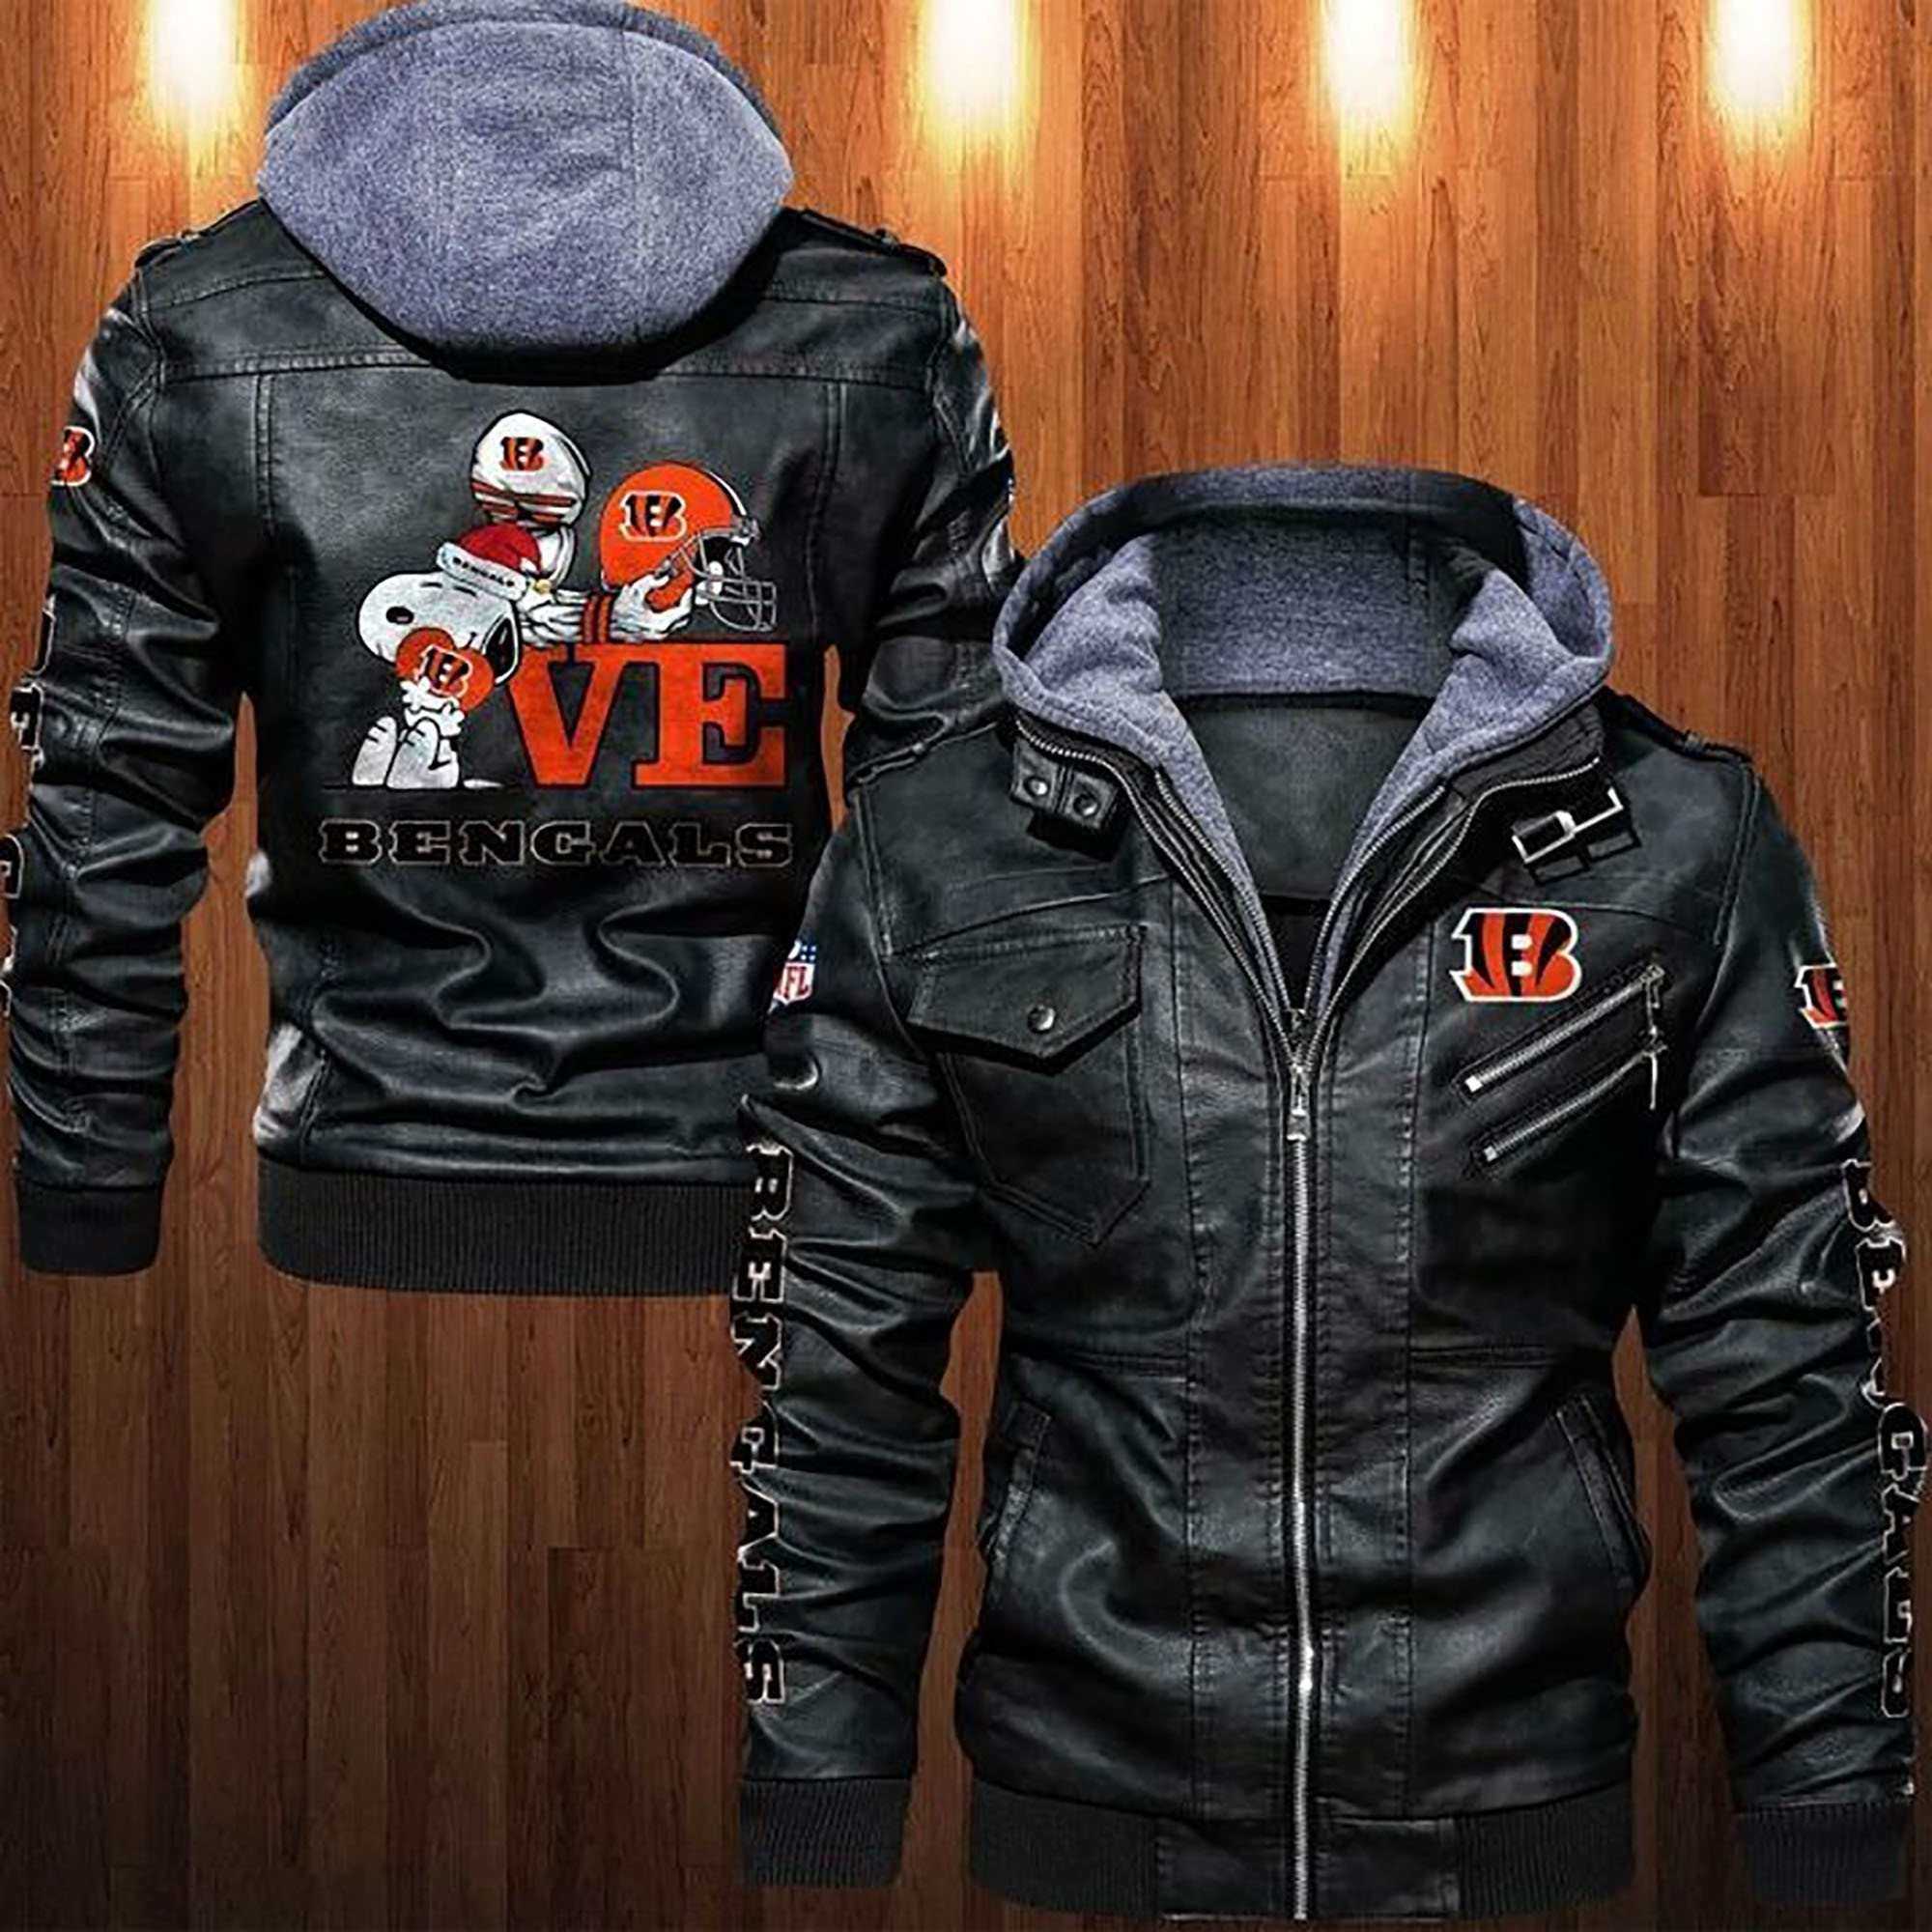 Choosing Leather Jacket that looks good on you below 51